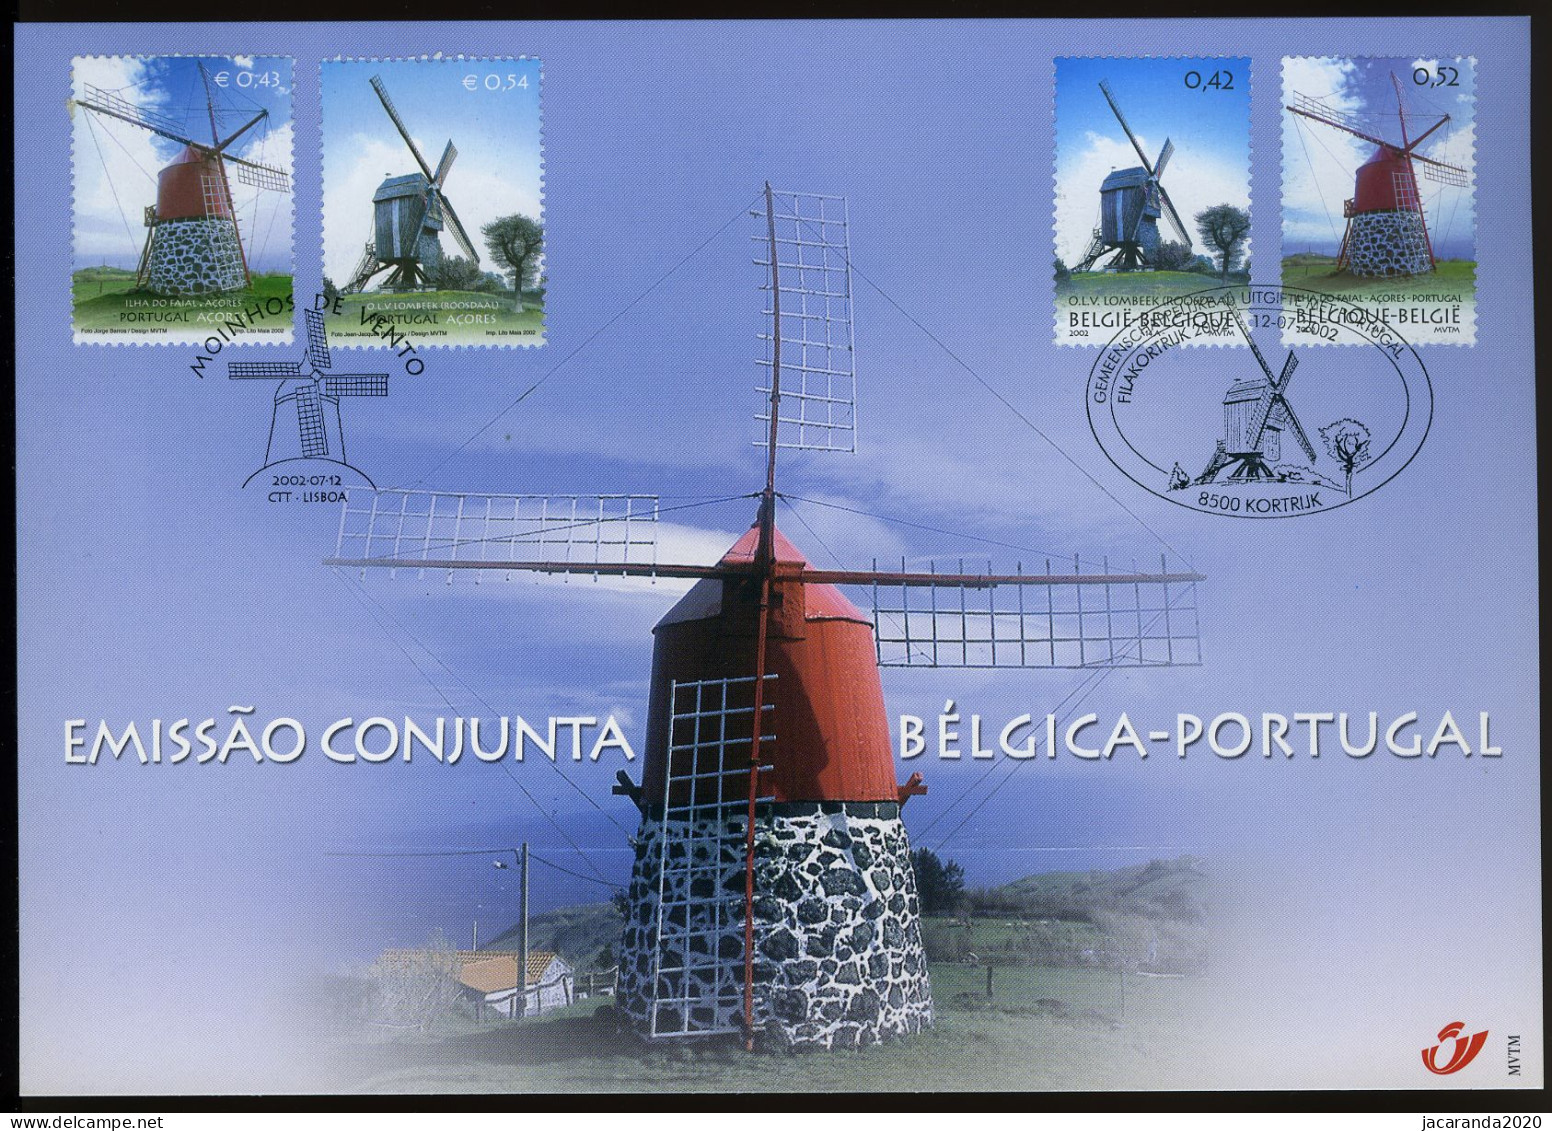 België 3091 HK - Windmolens - Gem. Uitgifte Met Portugal - 2002 - Souvenir Cards - Joint Issues [HK]